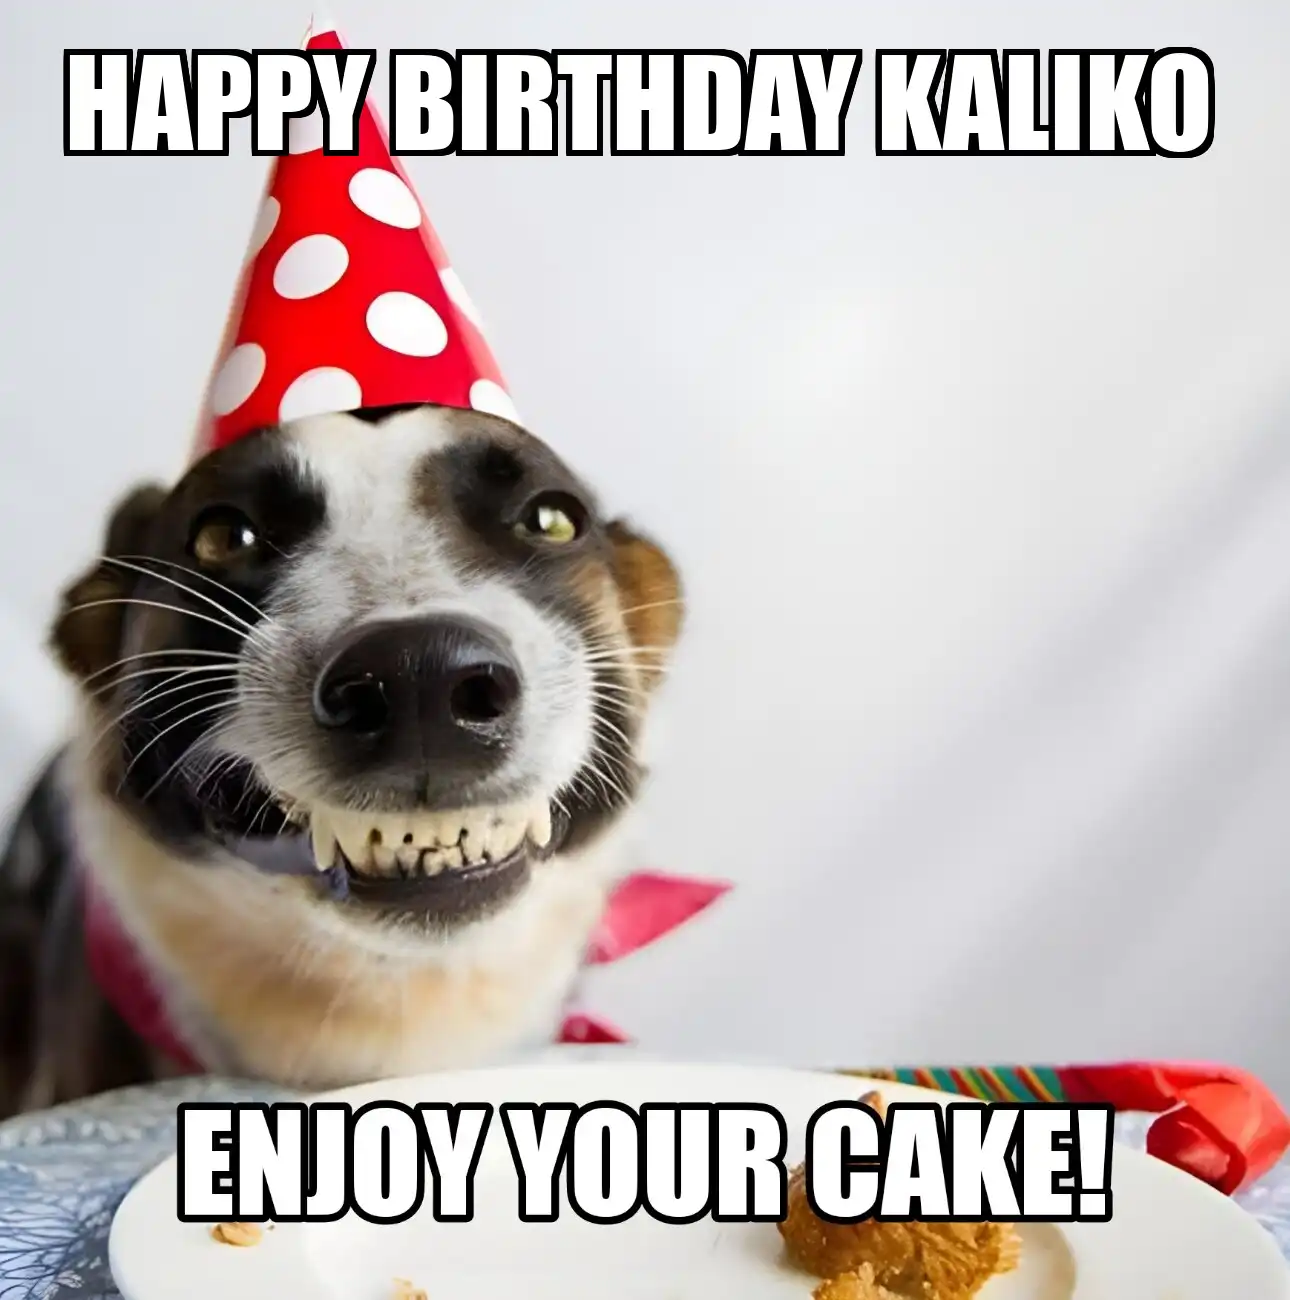 Happy Birthday Kaliko Enjoy Your Cake Dog Meme